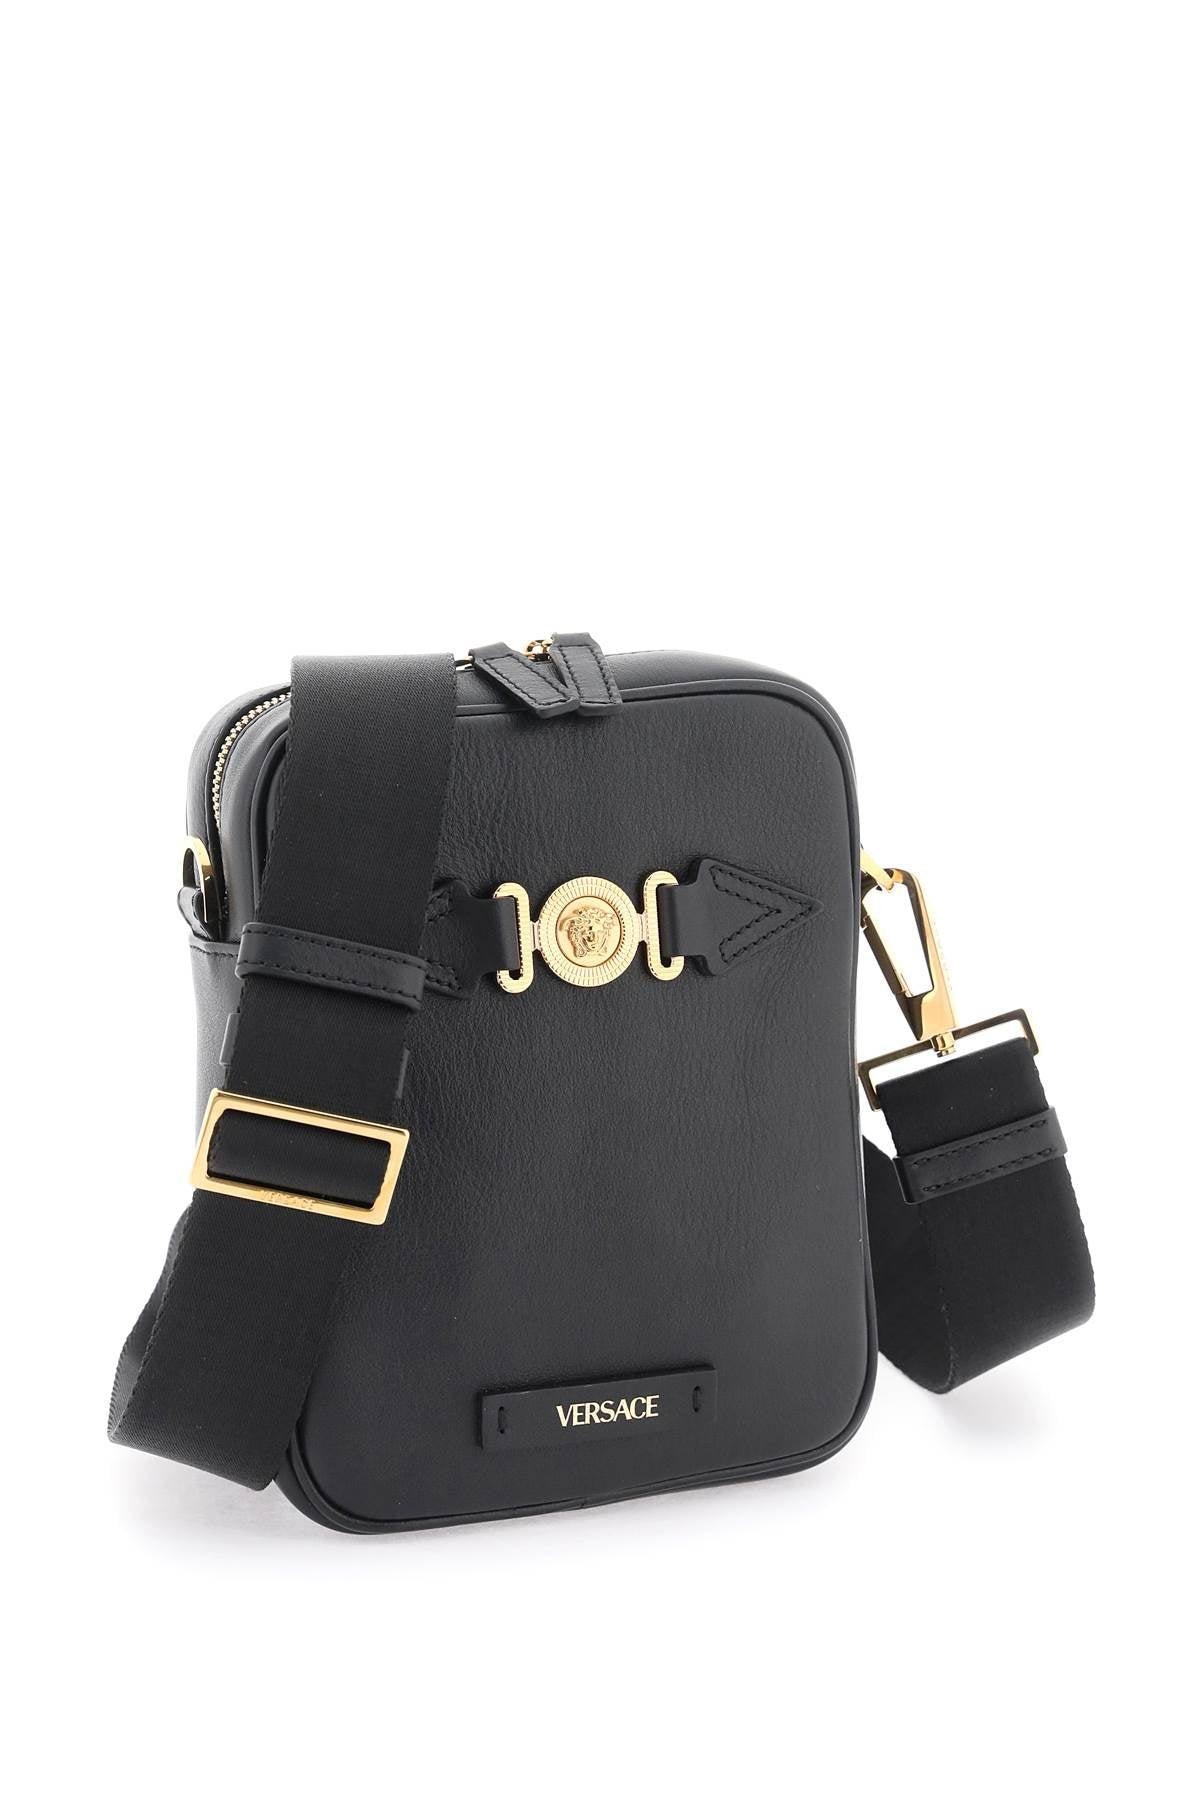 Versace Medusa biggie Crossbody Bag in Black for Men